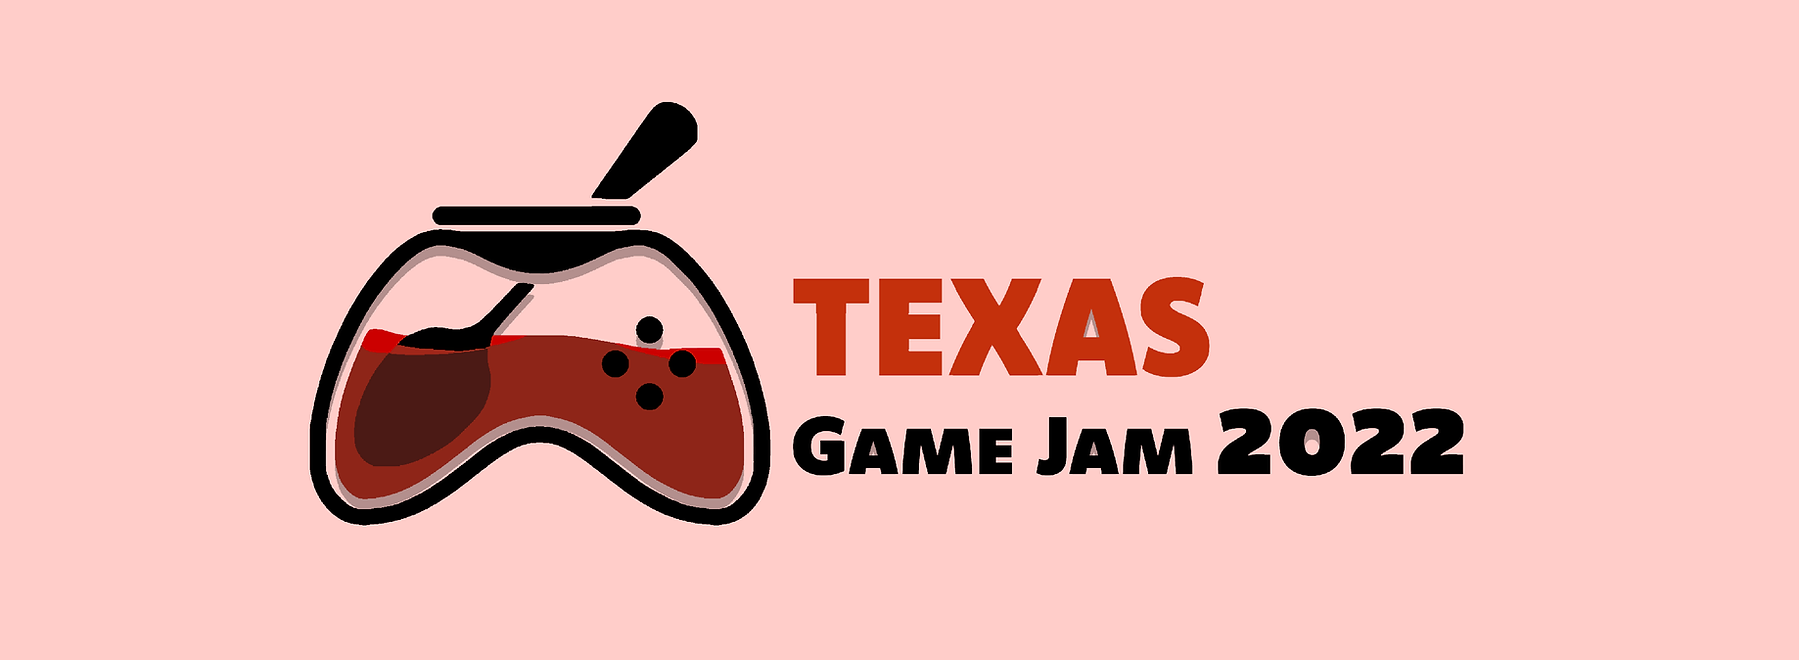 Texas Game Jam 2022